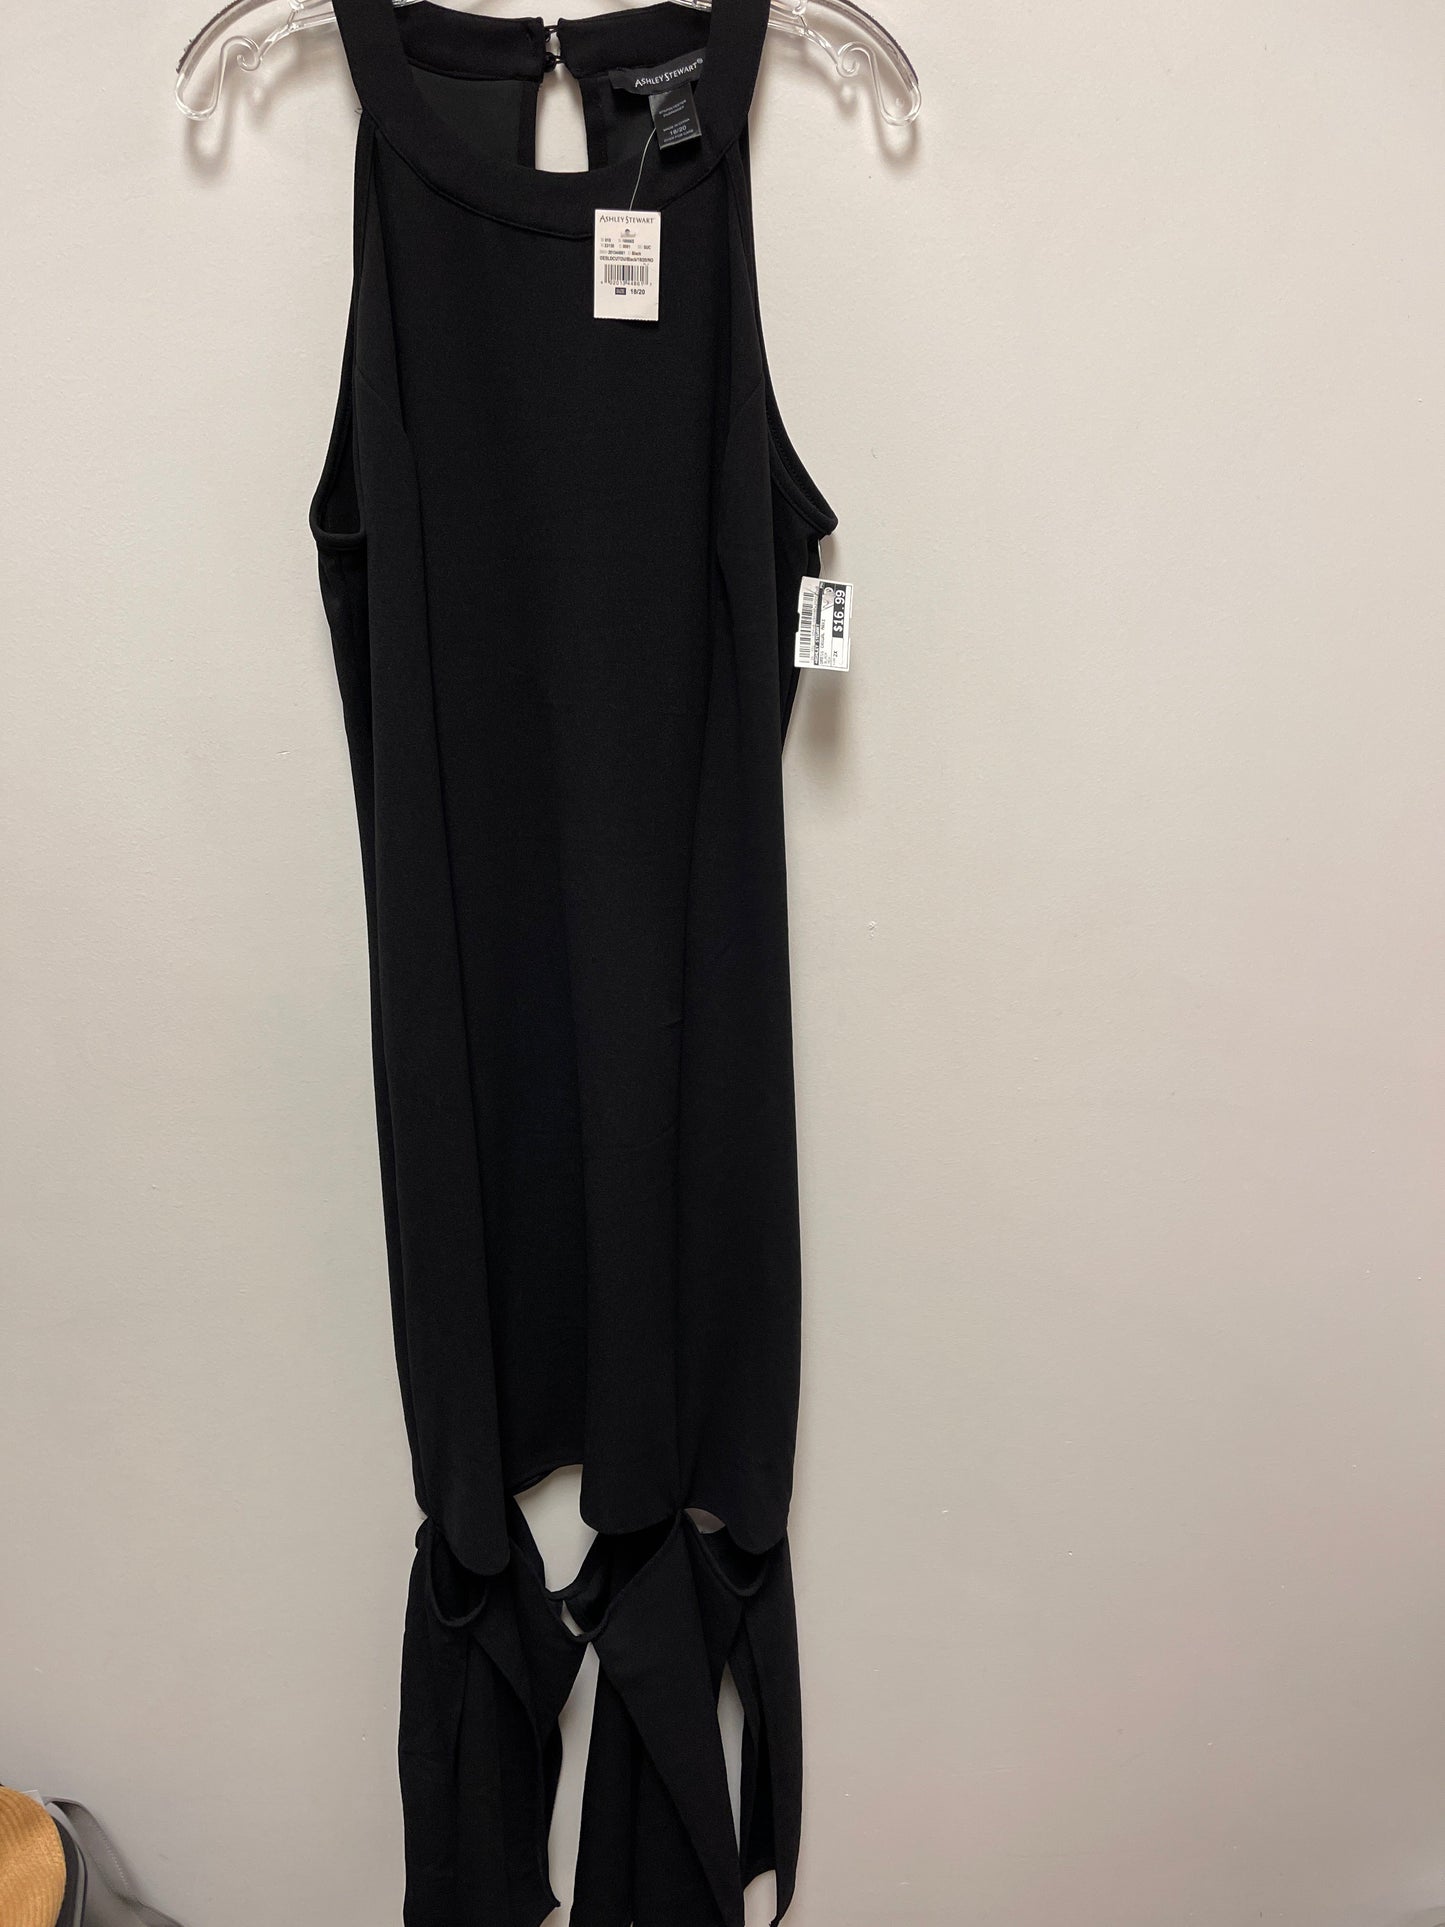 Black Dress Casual Maxi Ashley Stewart, Size 2x